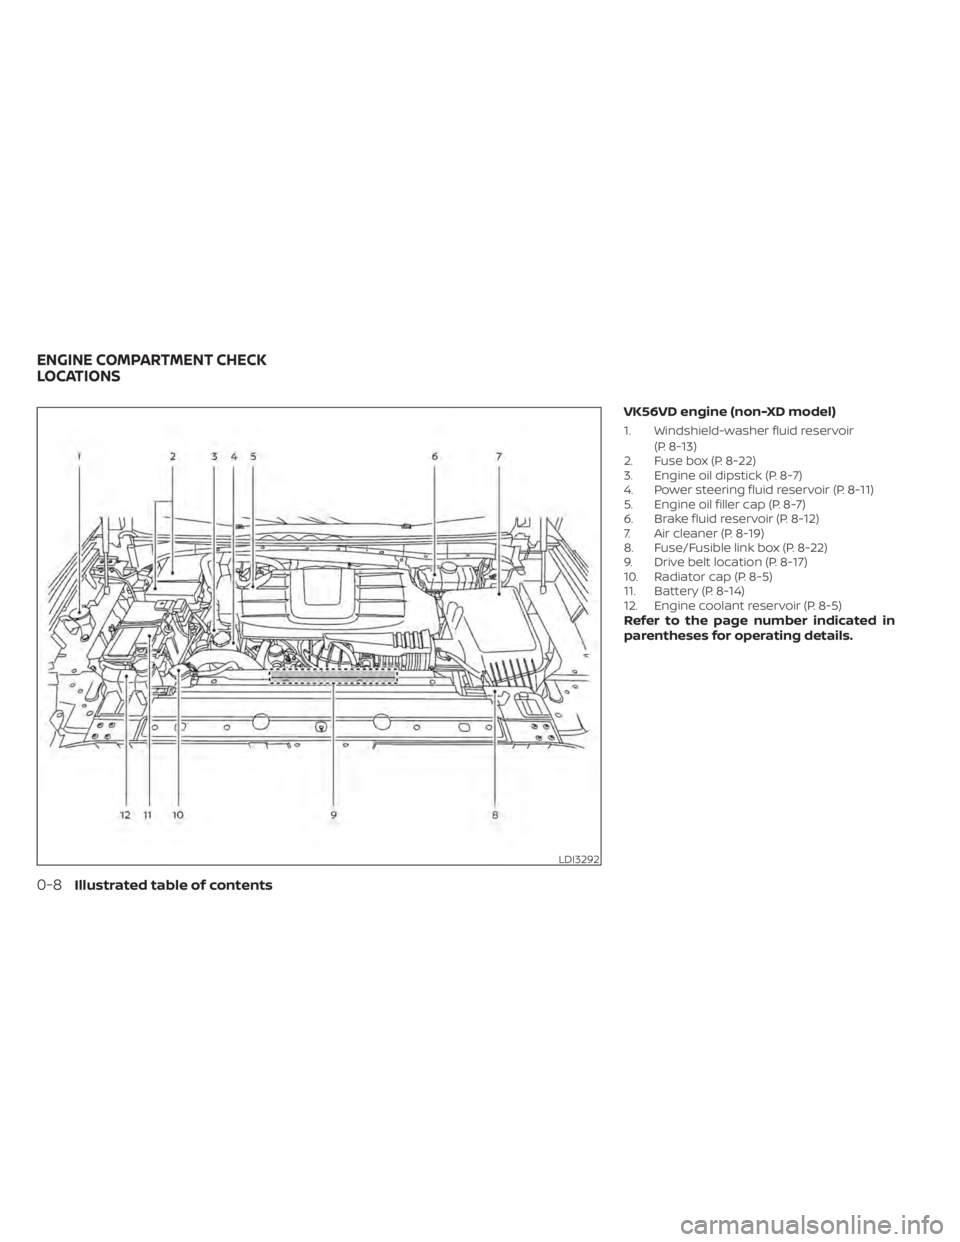 NISSAN TITAN 2020  Owner´s Manual VK56VD engine (non-XD model)
1. Windshield-washer fluid reservoir(P. 8-13)
2. Fuse box (P. 8-22)
3. Engine oil dipstick (P. 8-7)
4. Power steering fluid reservoir (P. 8-11)
5. Engine oil filler cap (P